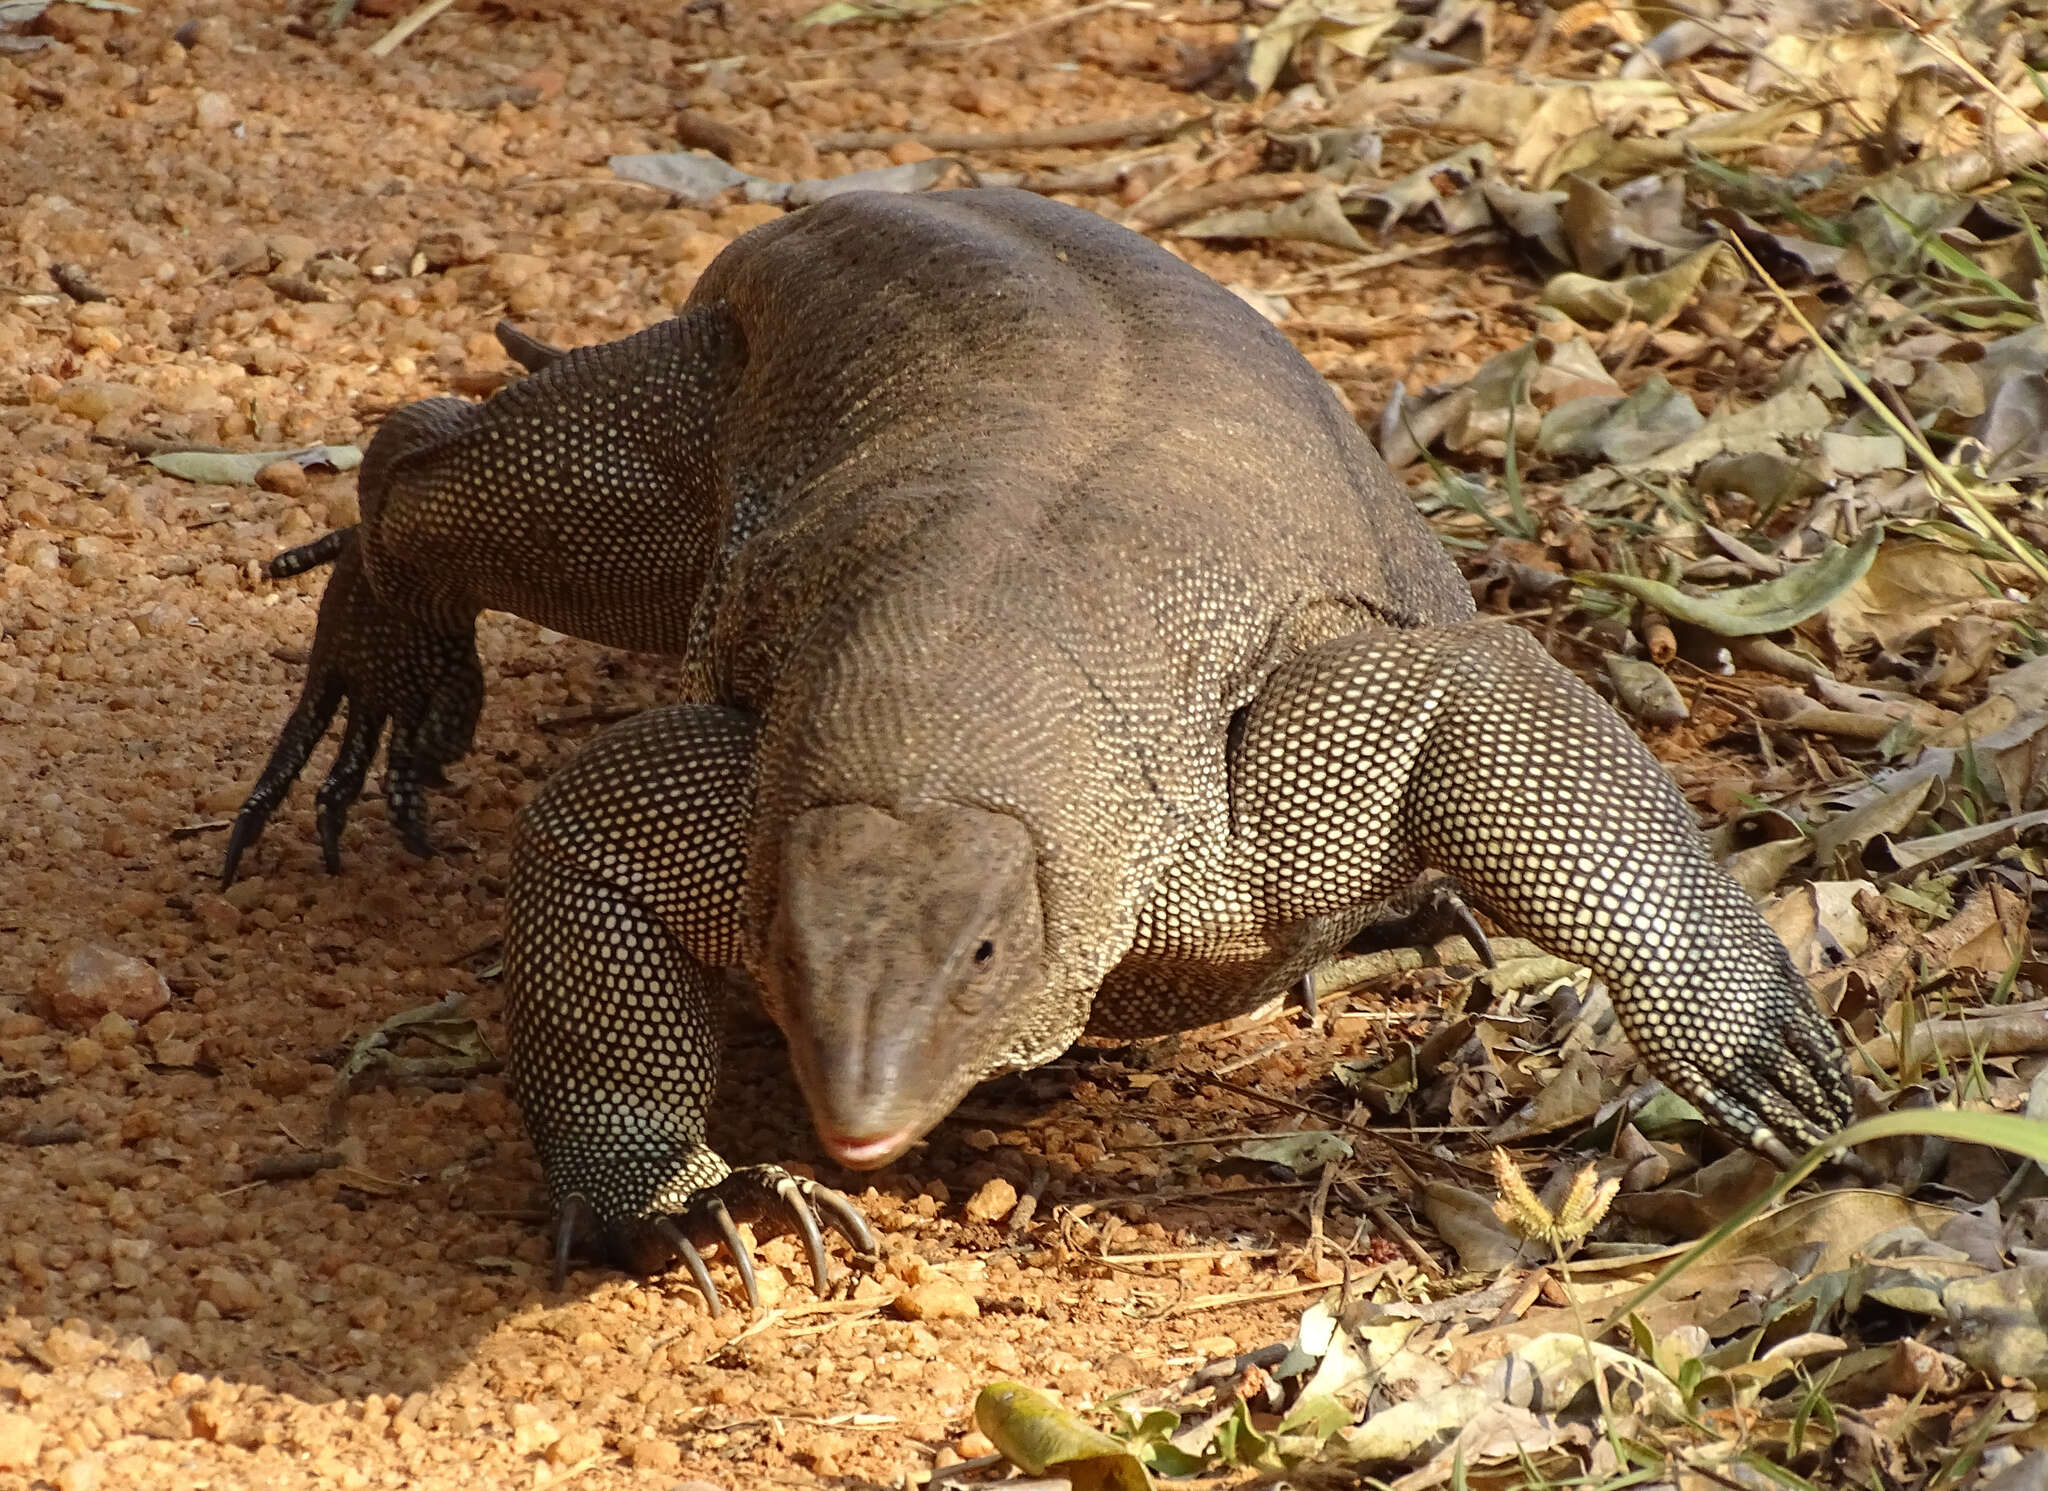 Image of Bengal Monitor Lizard